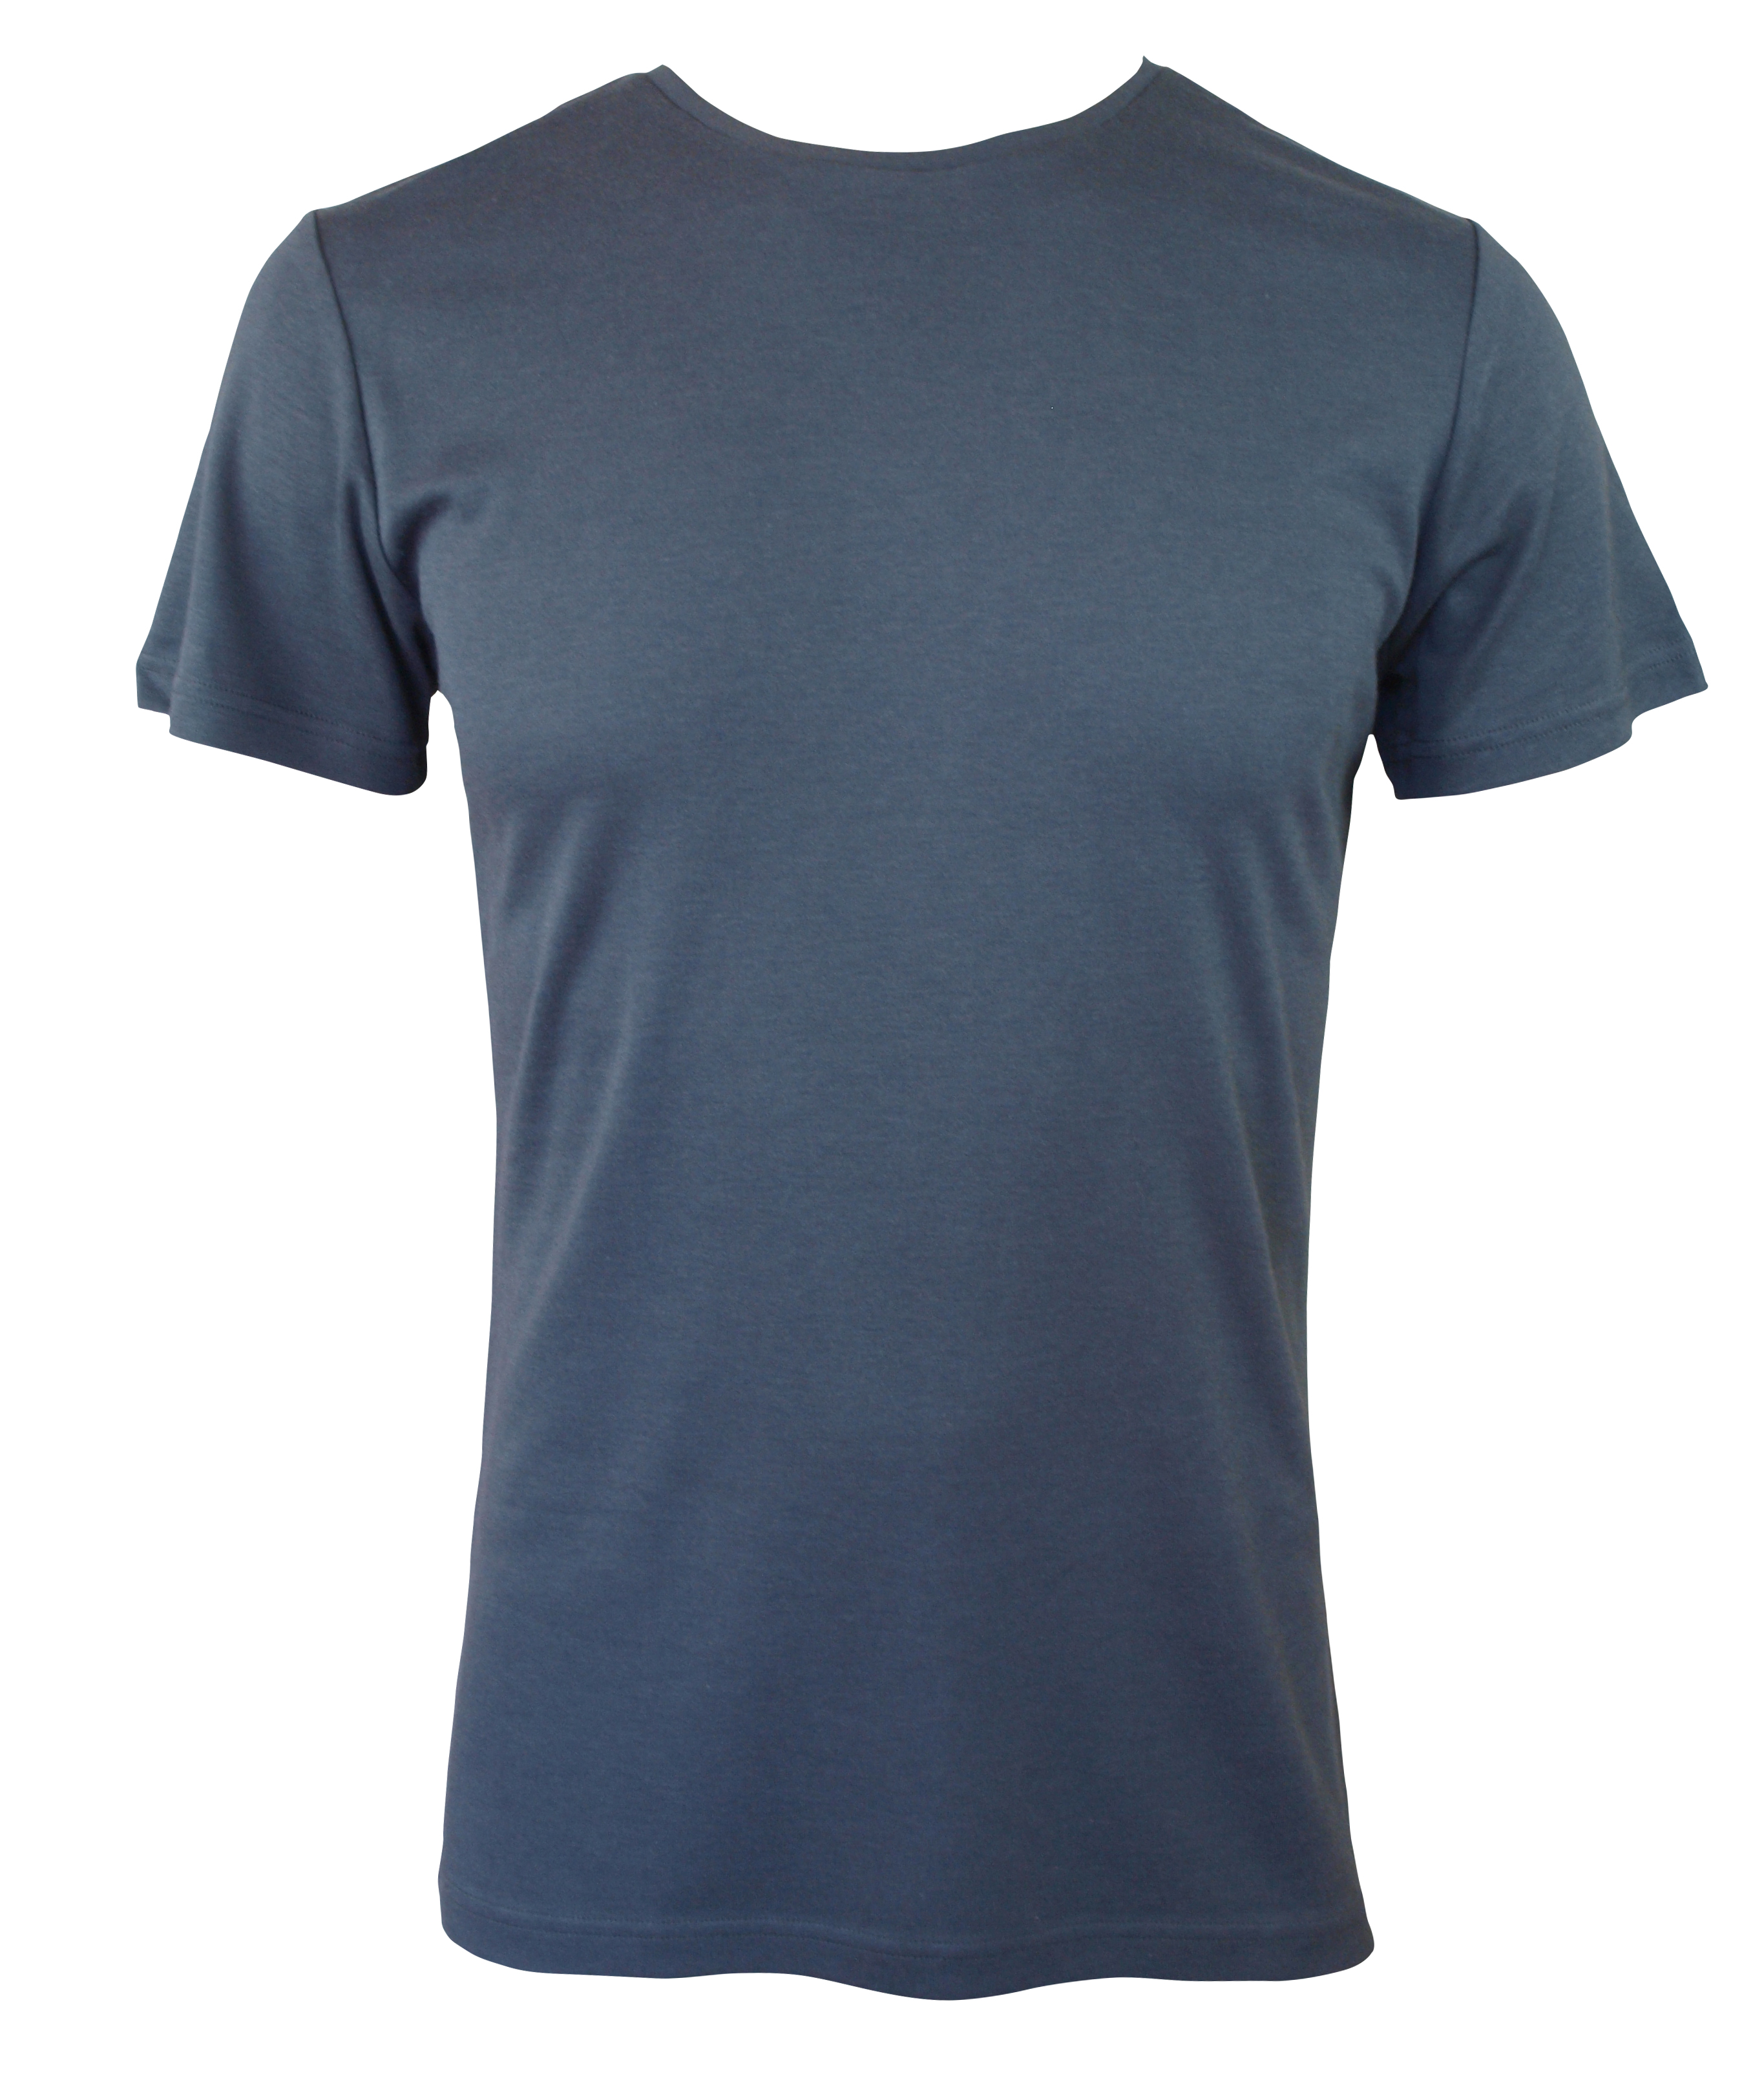 BamboolTextil mens bambool t-shirt - $22.50 : TAS Workwear Group, Order ...